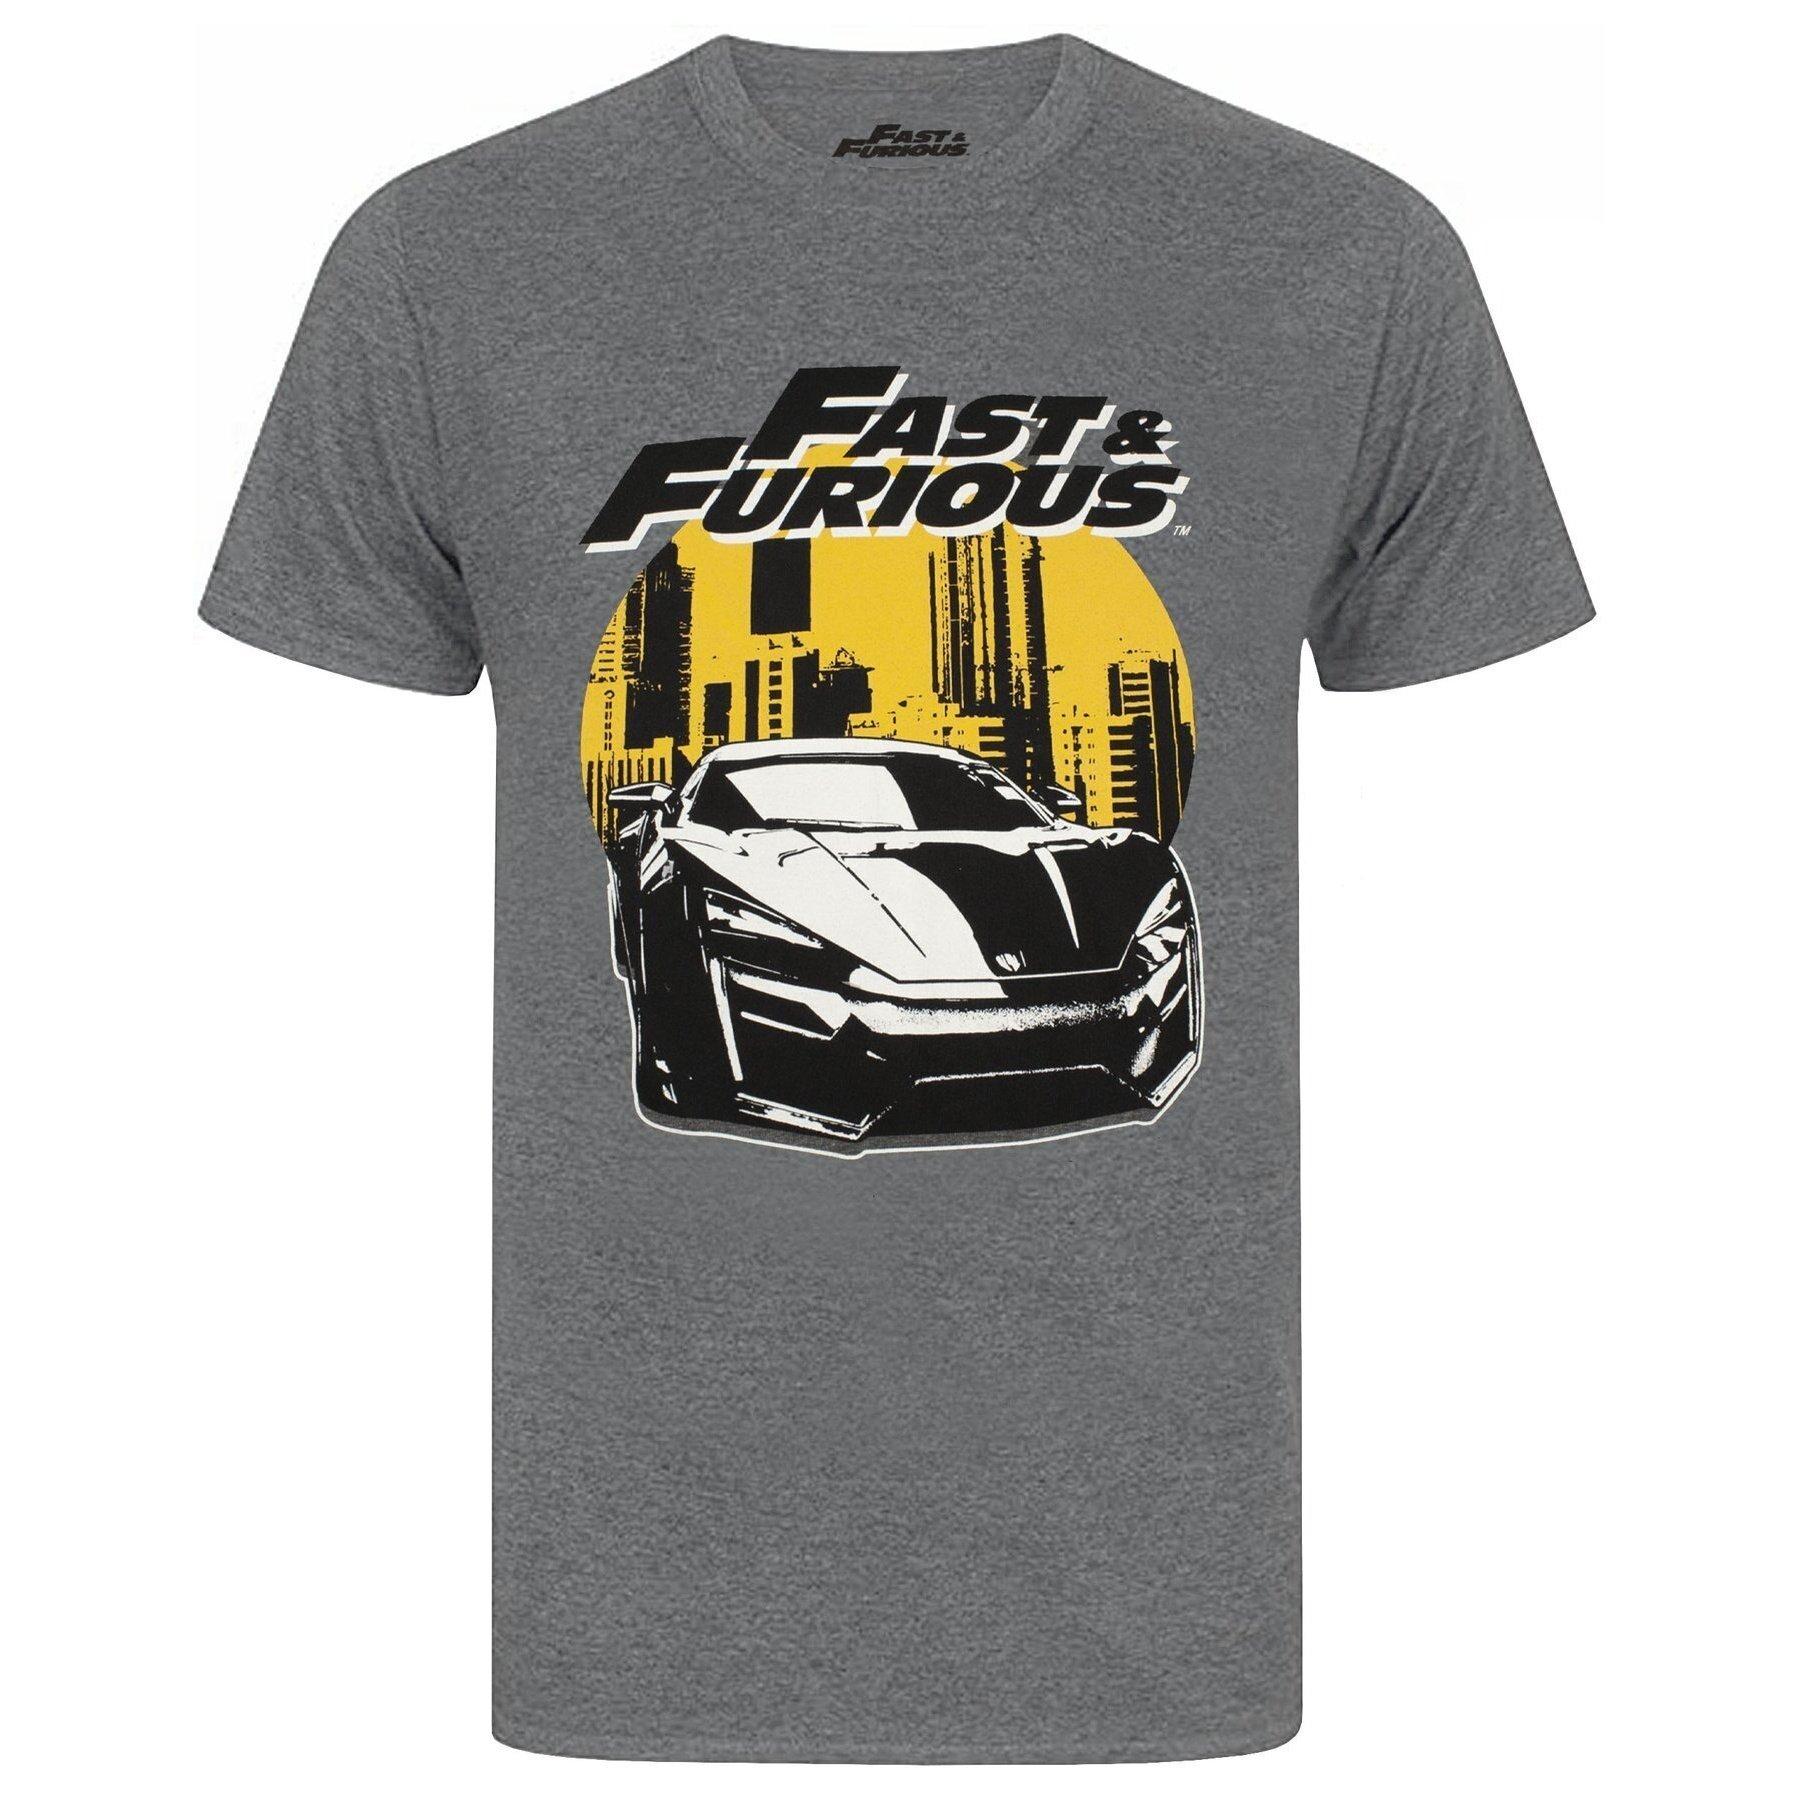 Tshirt Herren Charcoal Black L von Fast & Furious